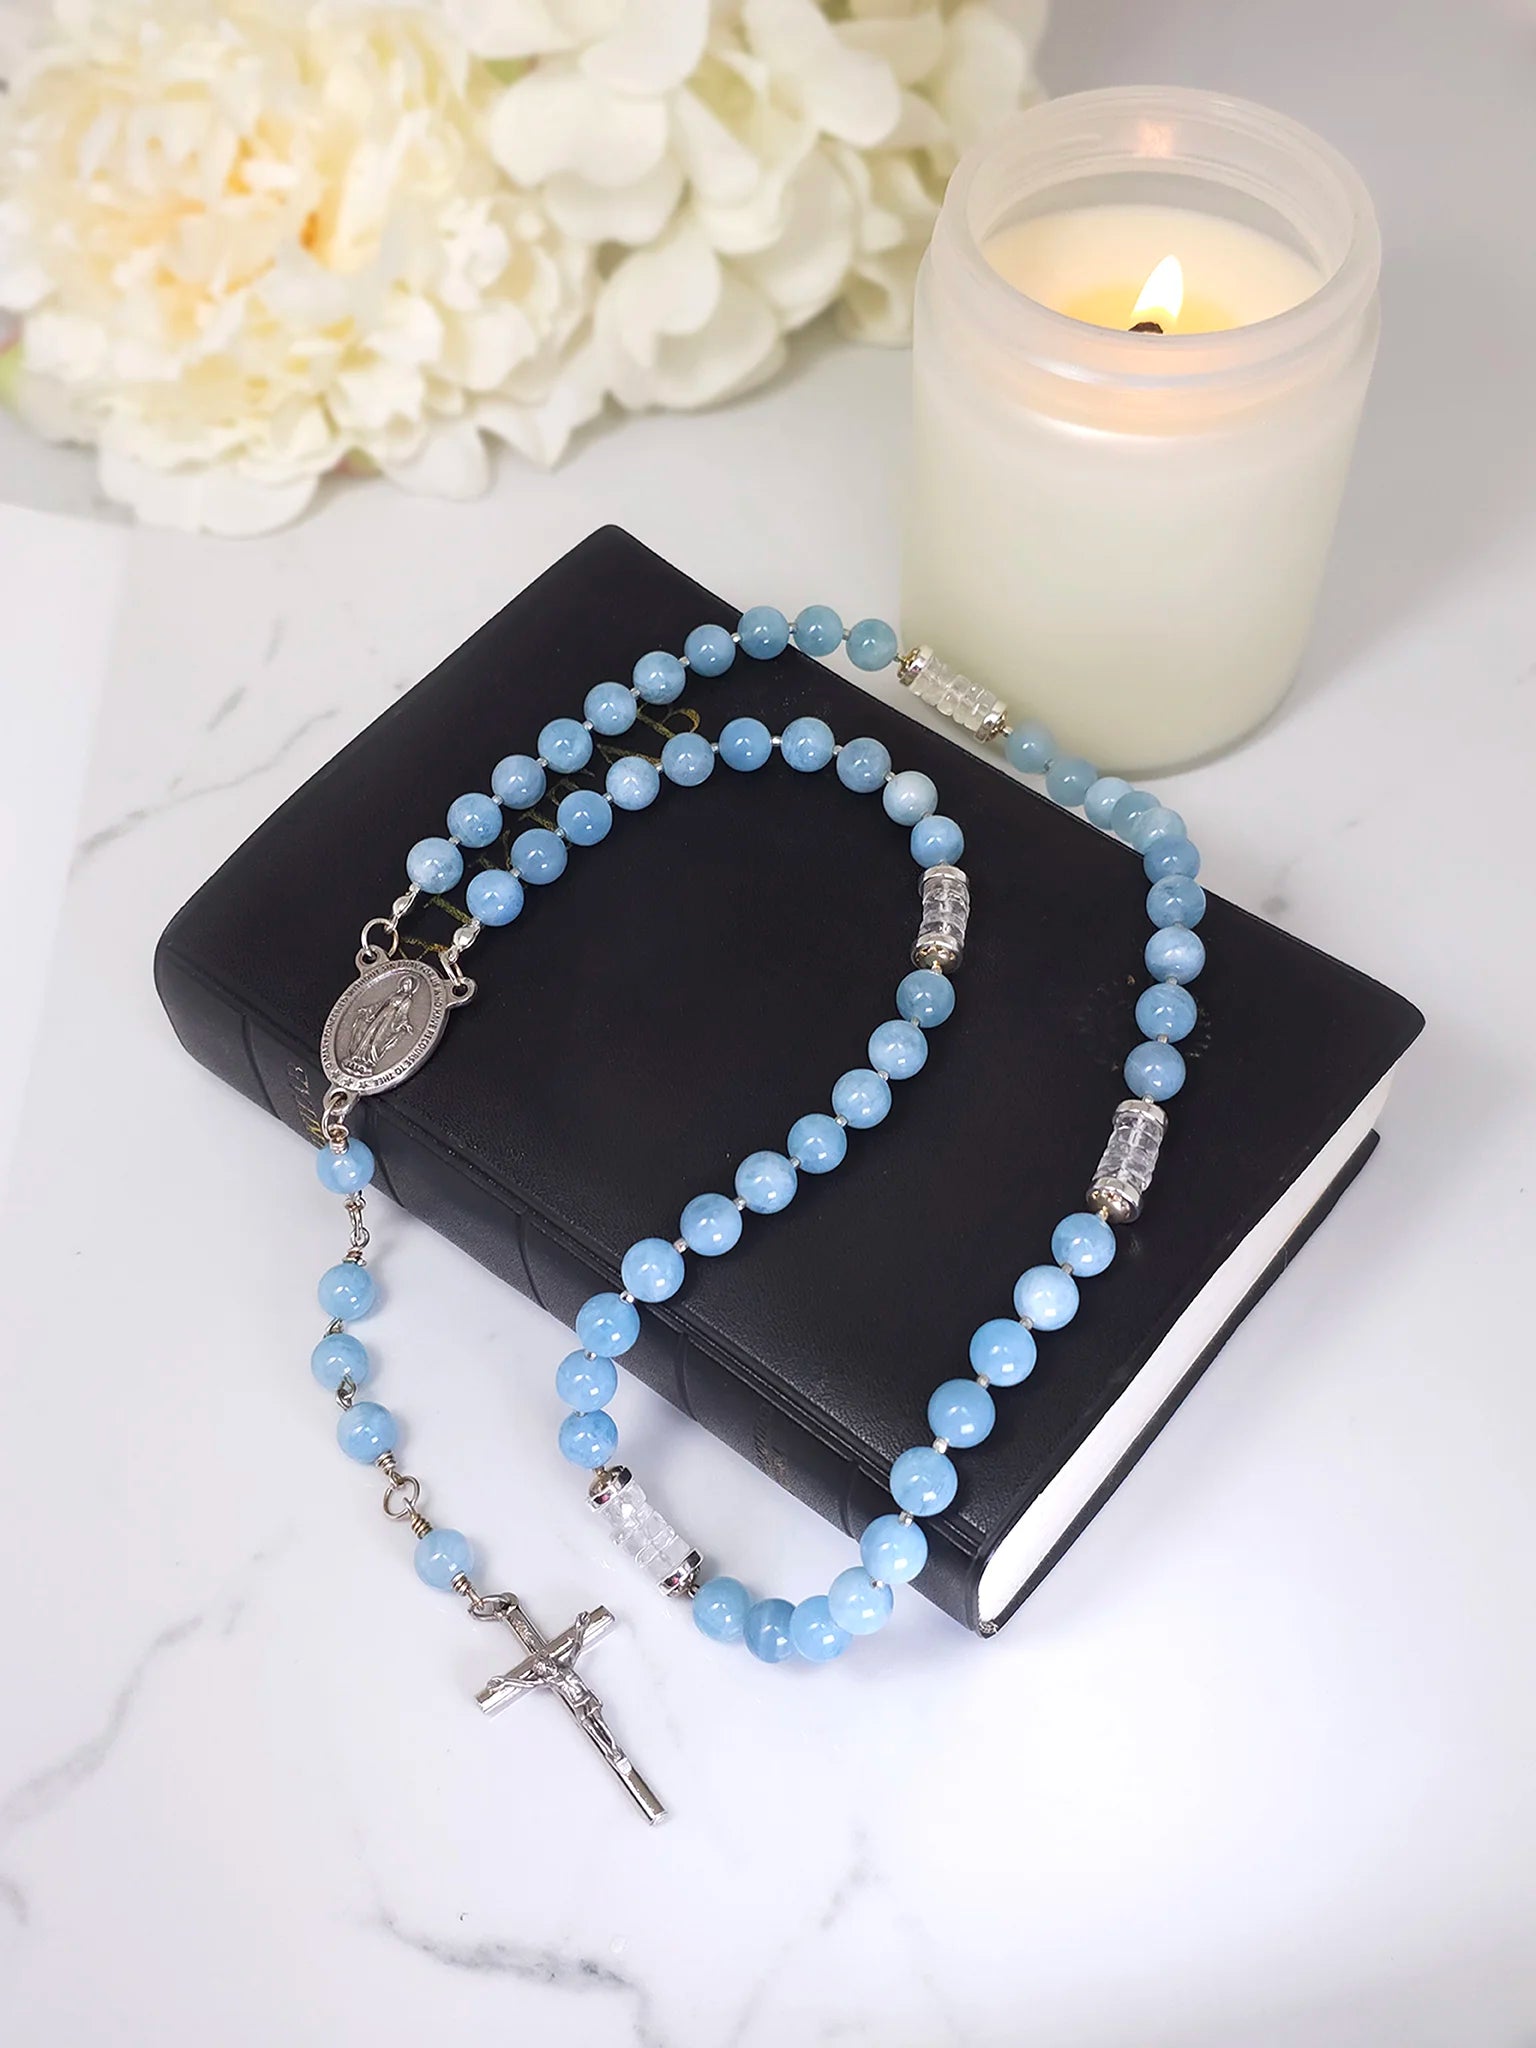 Catholic rosary showcasing blue gemstones, Italian Crucifix pendant, and Virgin Mary centerpiece.